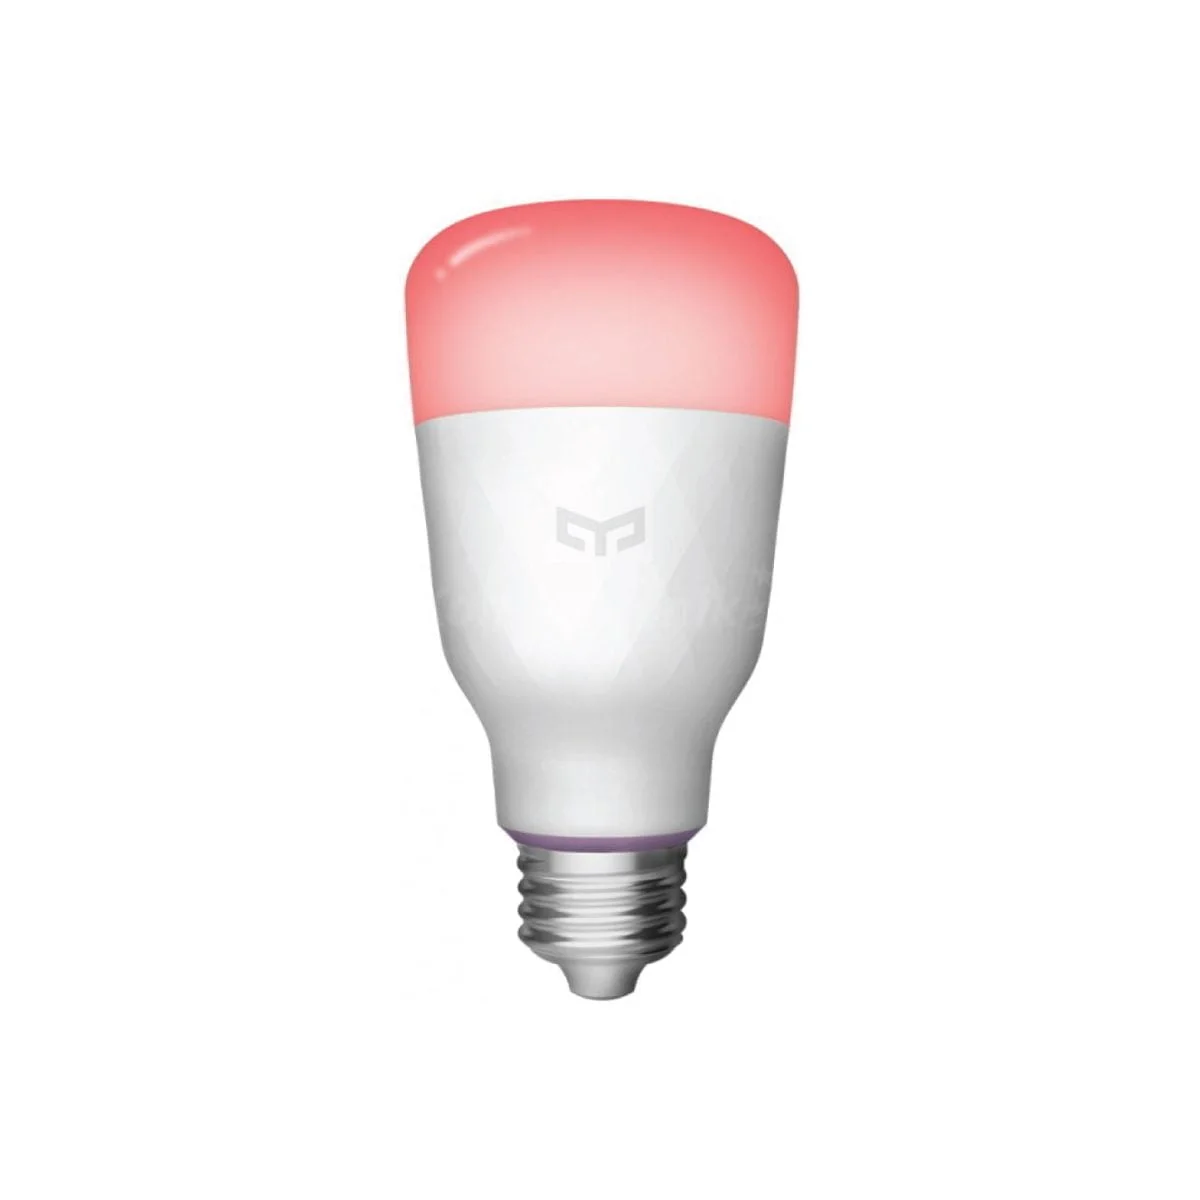 Yldp13Yl 4 1 شاومي سوف تسمح لك لمبة الإضاءة الذكية Yeelight 1S Rgb بإنشاء منزلك الذكي الخاص. يمكنك التحكم فيه بصوتك أو تطبيقك وتحديد درجة الحرارة والقوة التي يجب أن يلمع بها. التدفق الضوئي: 800 لومن درجة حرارة اللون: 1700 K-6500K حامل المصباح: E27 الطاقة المقدرة: 8.5 واط &Nbsp; 16 مليون لون مع تمكين Wifi والتحكم الصوتي والتحكم في التطبيقات ومزامنة الموسيقى &Lt;Img Class=&Quot;Alignnone Wp-Image-8061 Size-Full&Quot; Src=&Quot;Https://Lablaab.com/Wp-Content/Uploads/2020/04/Bulb-27-2-Scaled.jpg&Quot; Alt=&Quot;&Quot; Width=&Quot;2560&Quot; Height=&Quot;357&Quot;&Gt; &Nbsp; ييلايت سمارت لمبة لمبة يلايت الذكية 1S (ألوان)